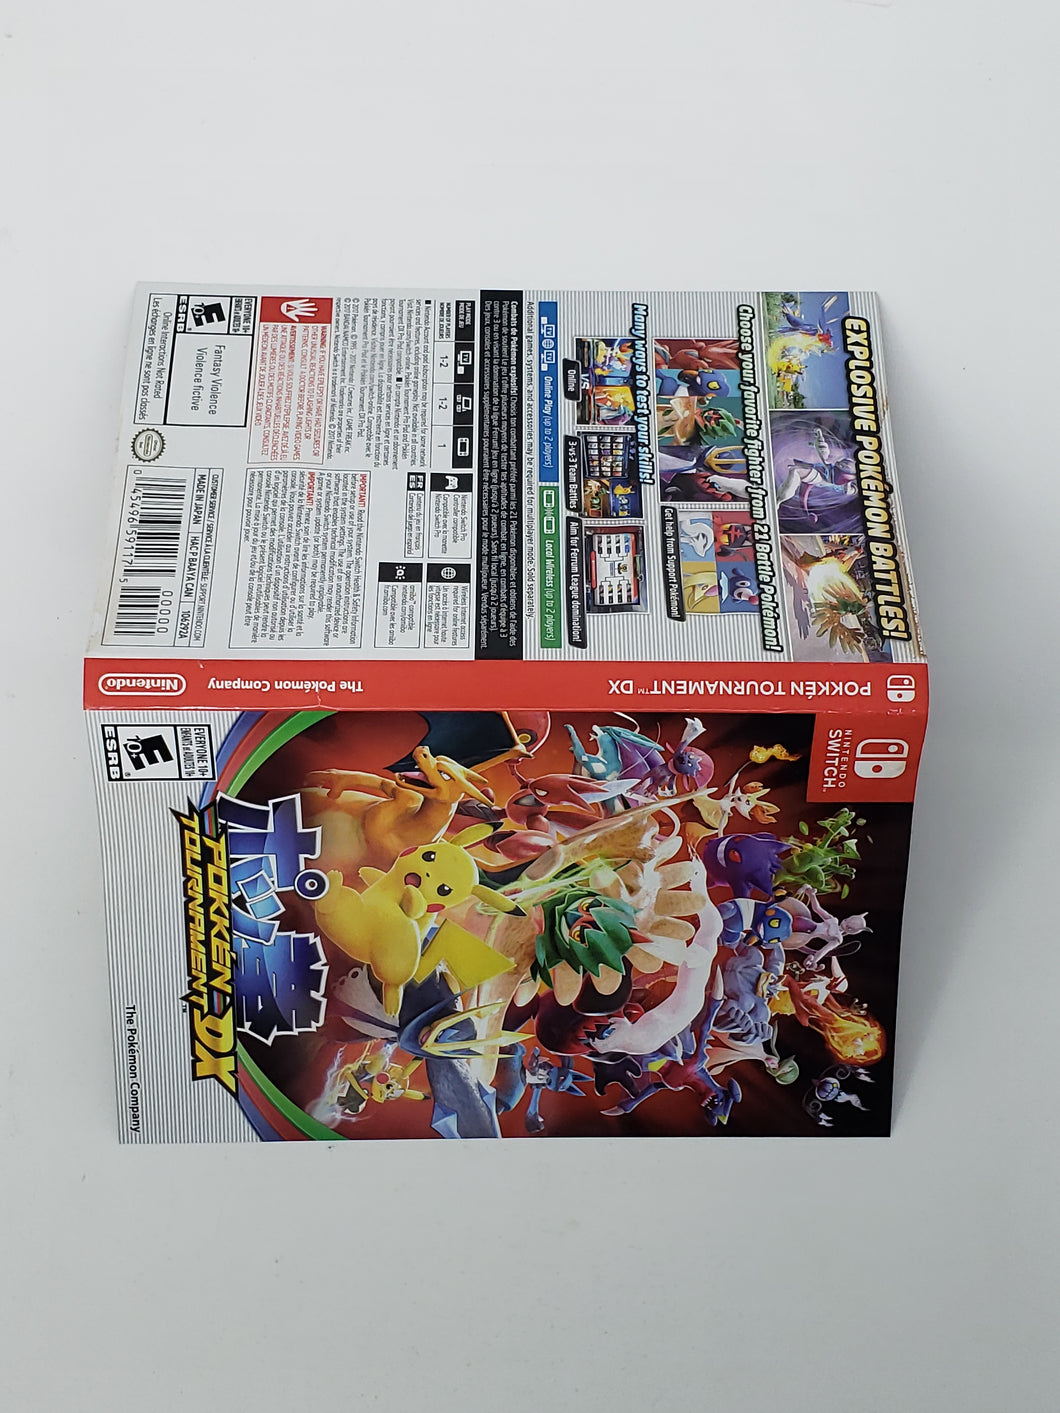 Pokken Tournament DX [Cover art] - Nintendo Switch